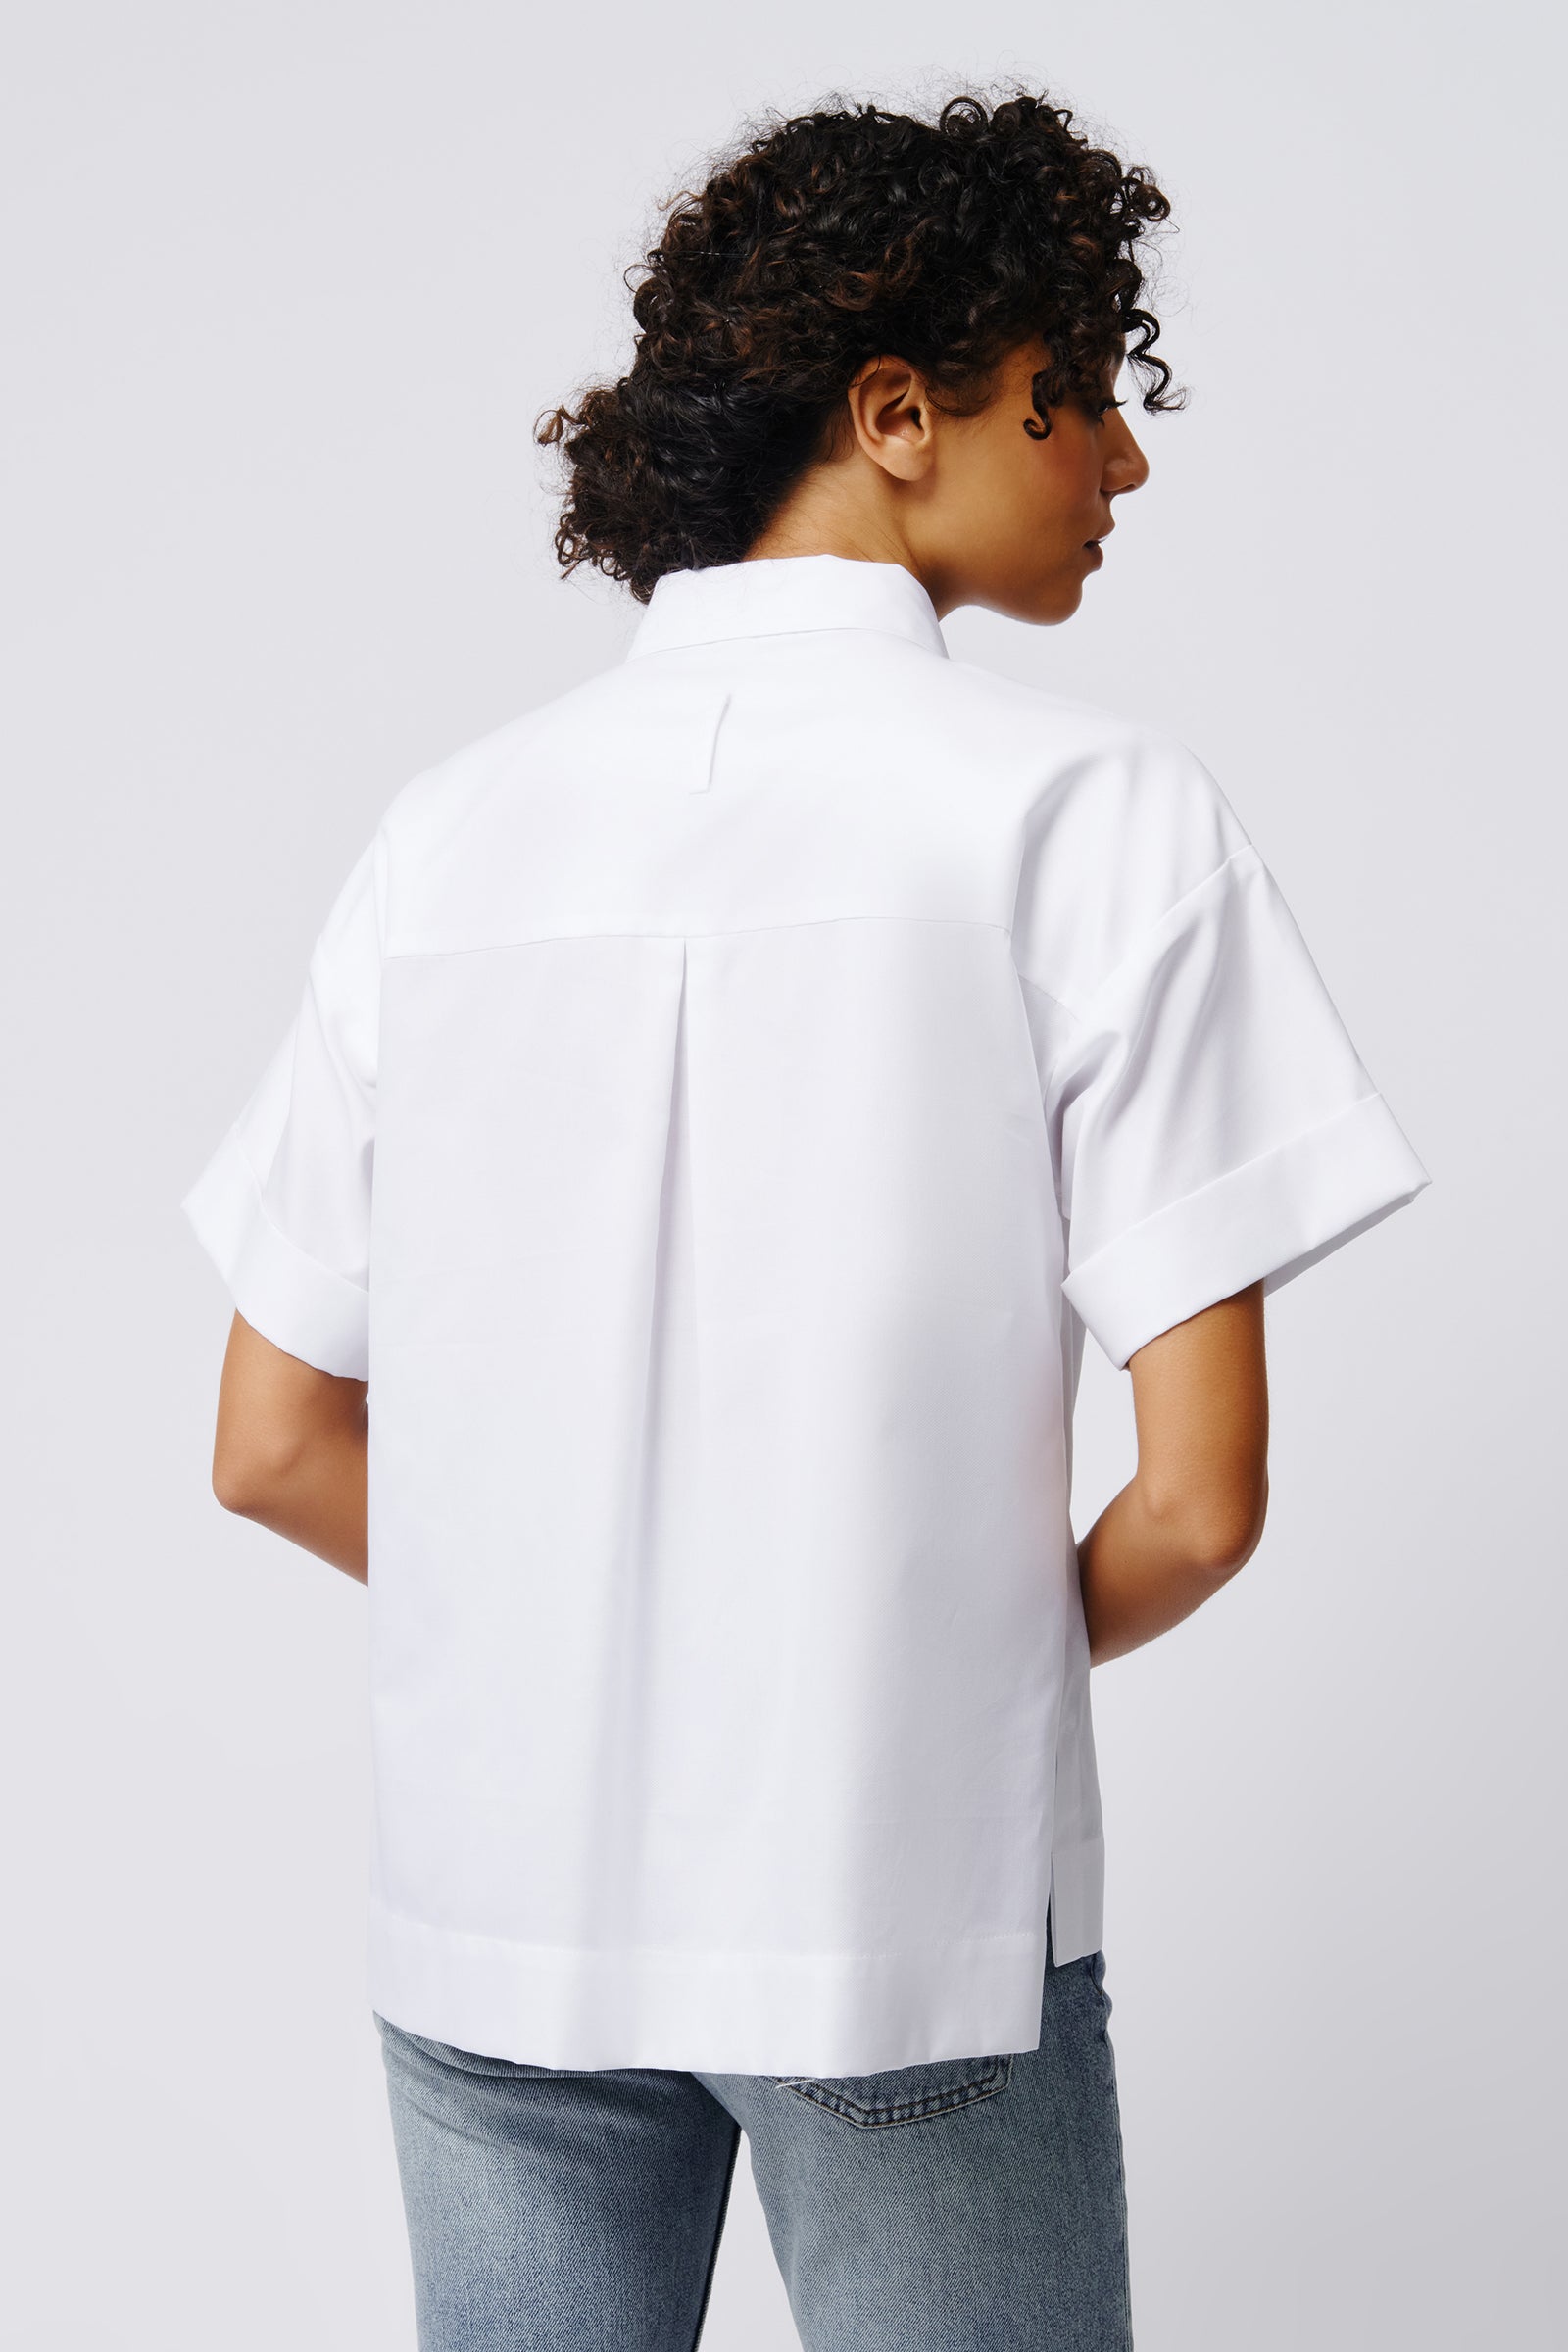 Kal Rieman Billie Cuffed Short Sleeve Shirt in White on Model Front View Crop 2